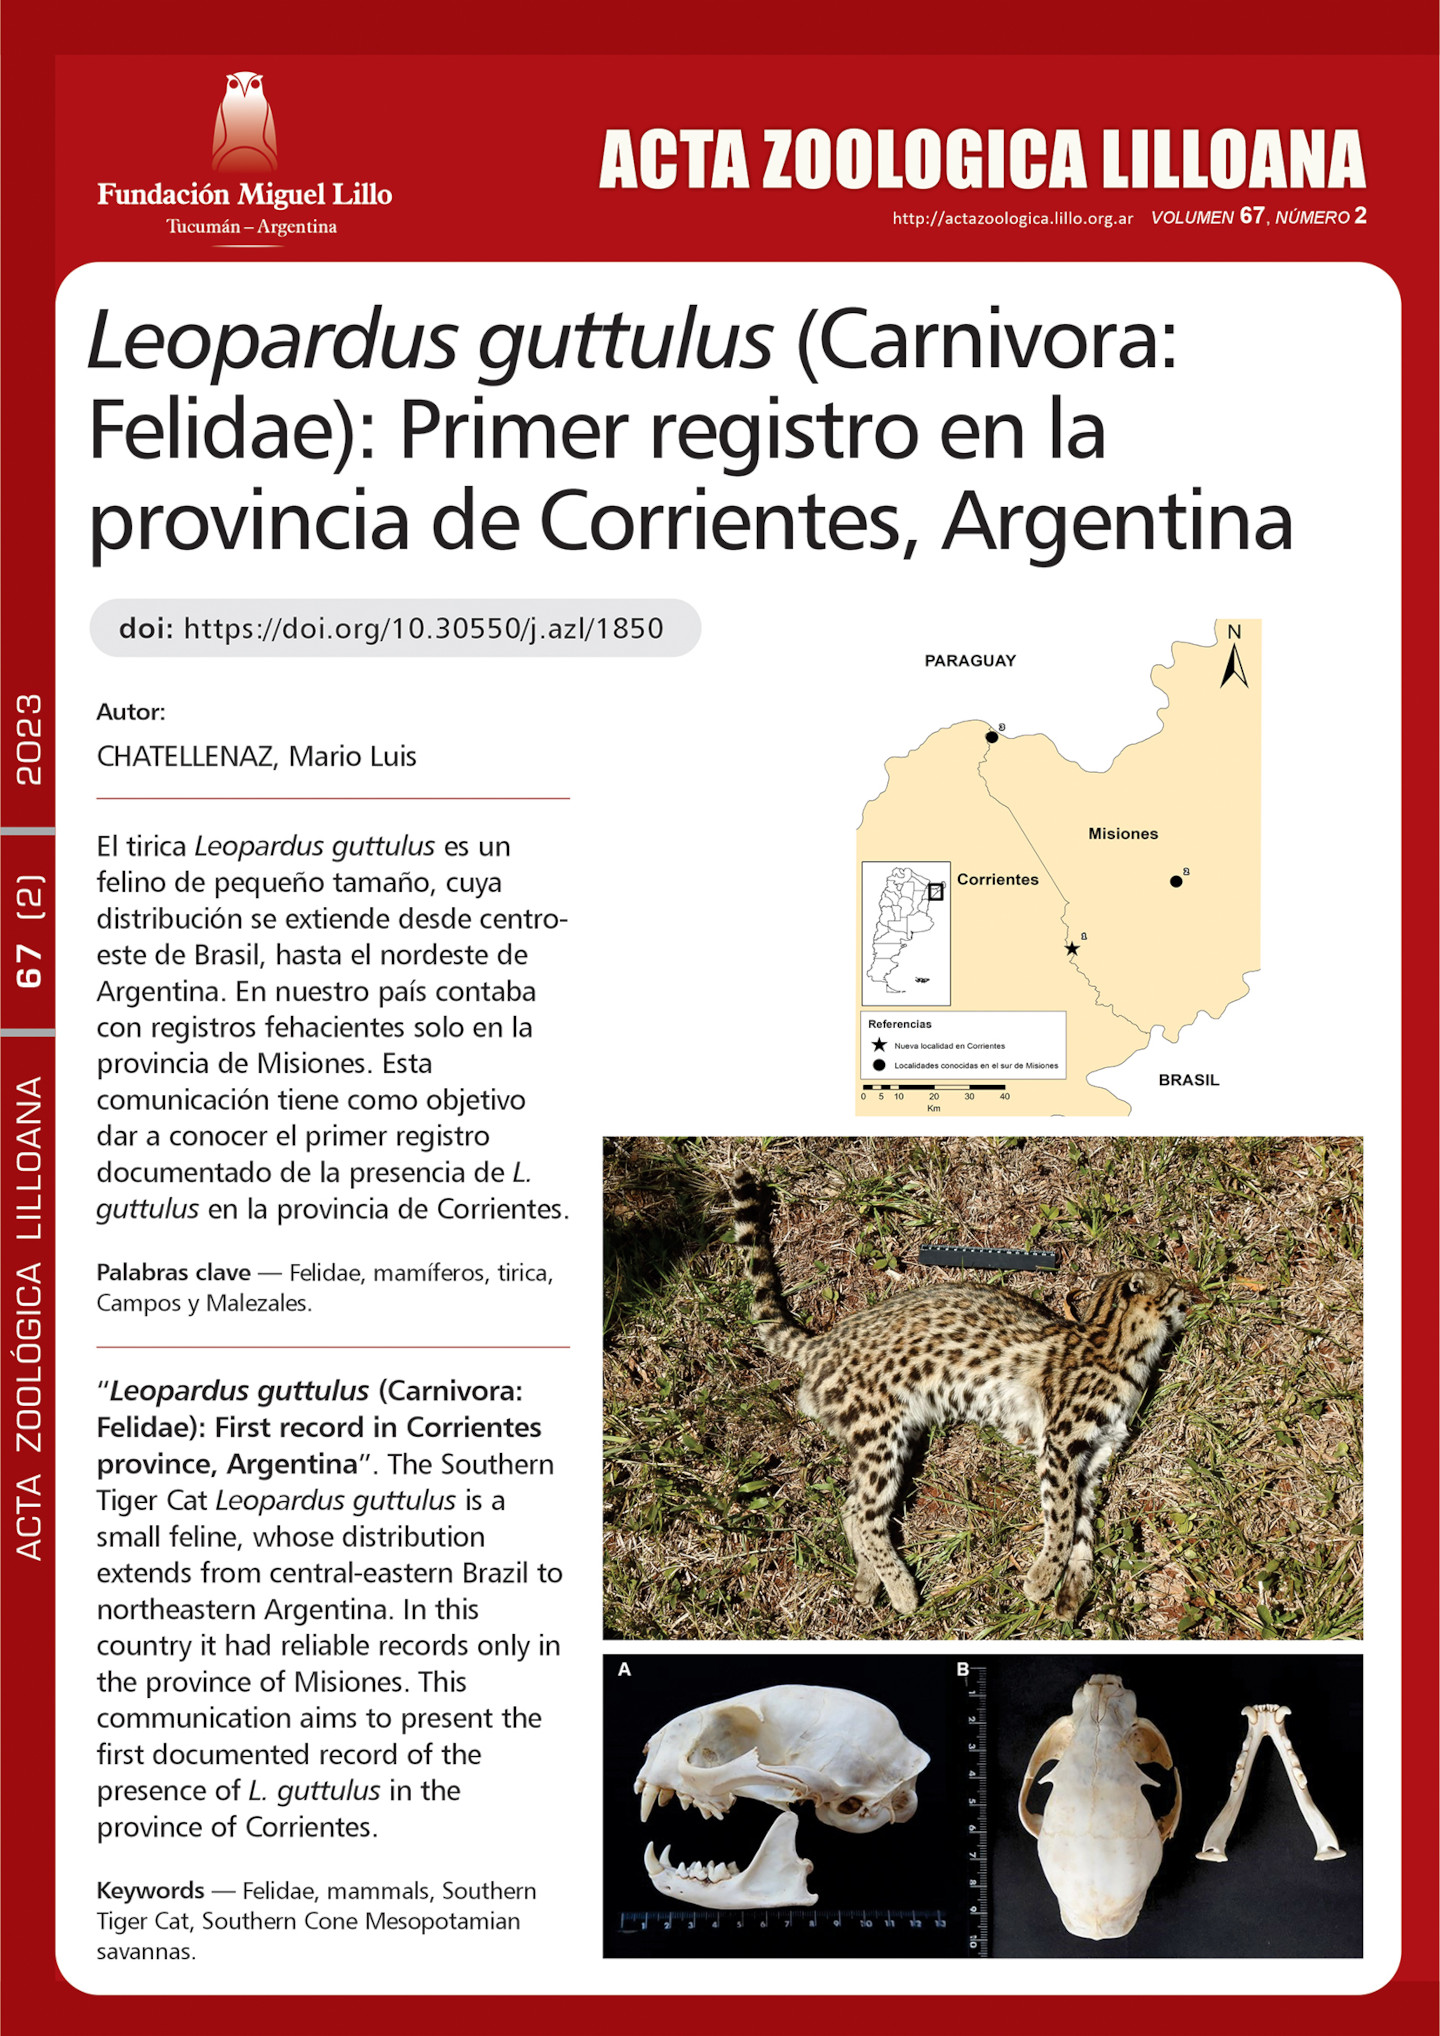 Leopardus guttulus (Carnivora: Felidae): Primer registro en la provincia de Corrientes, Argentina